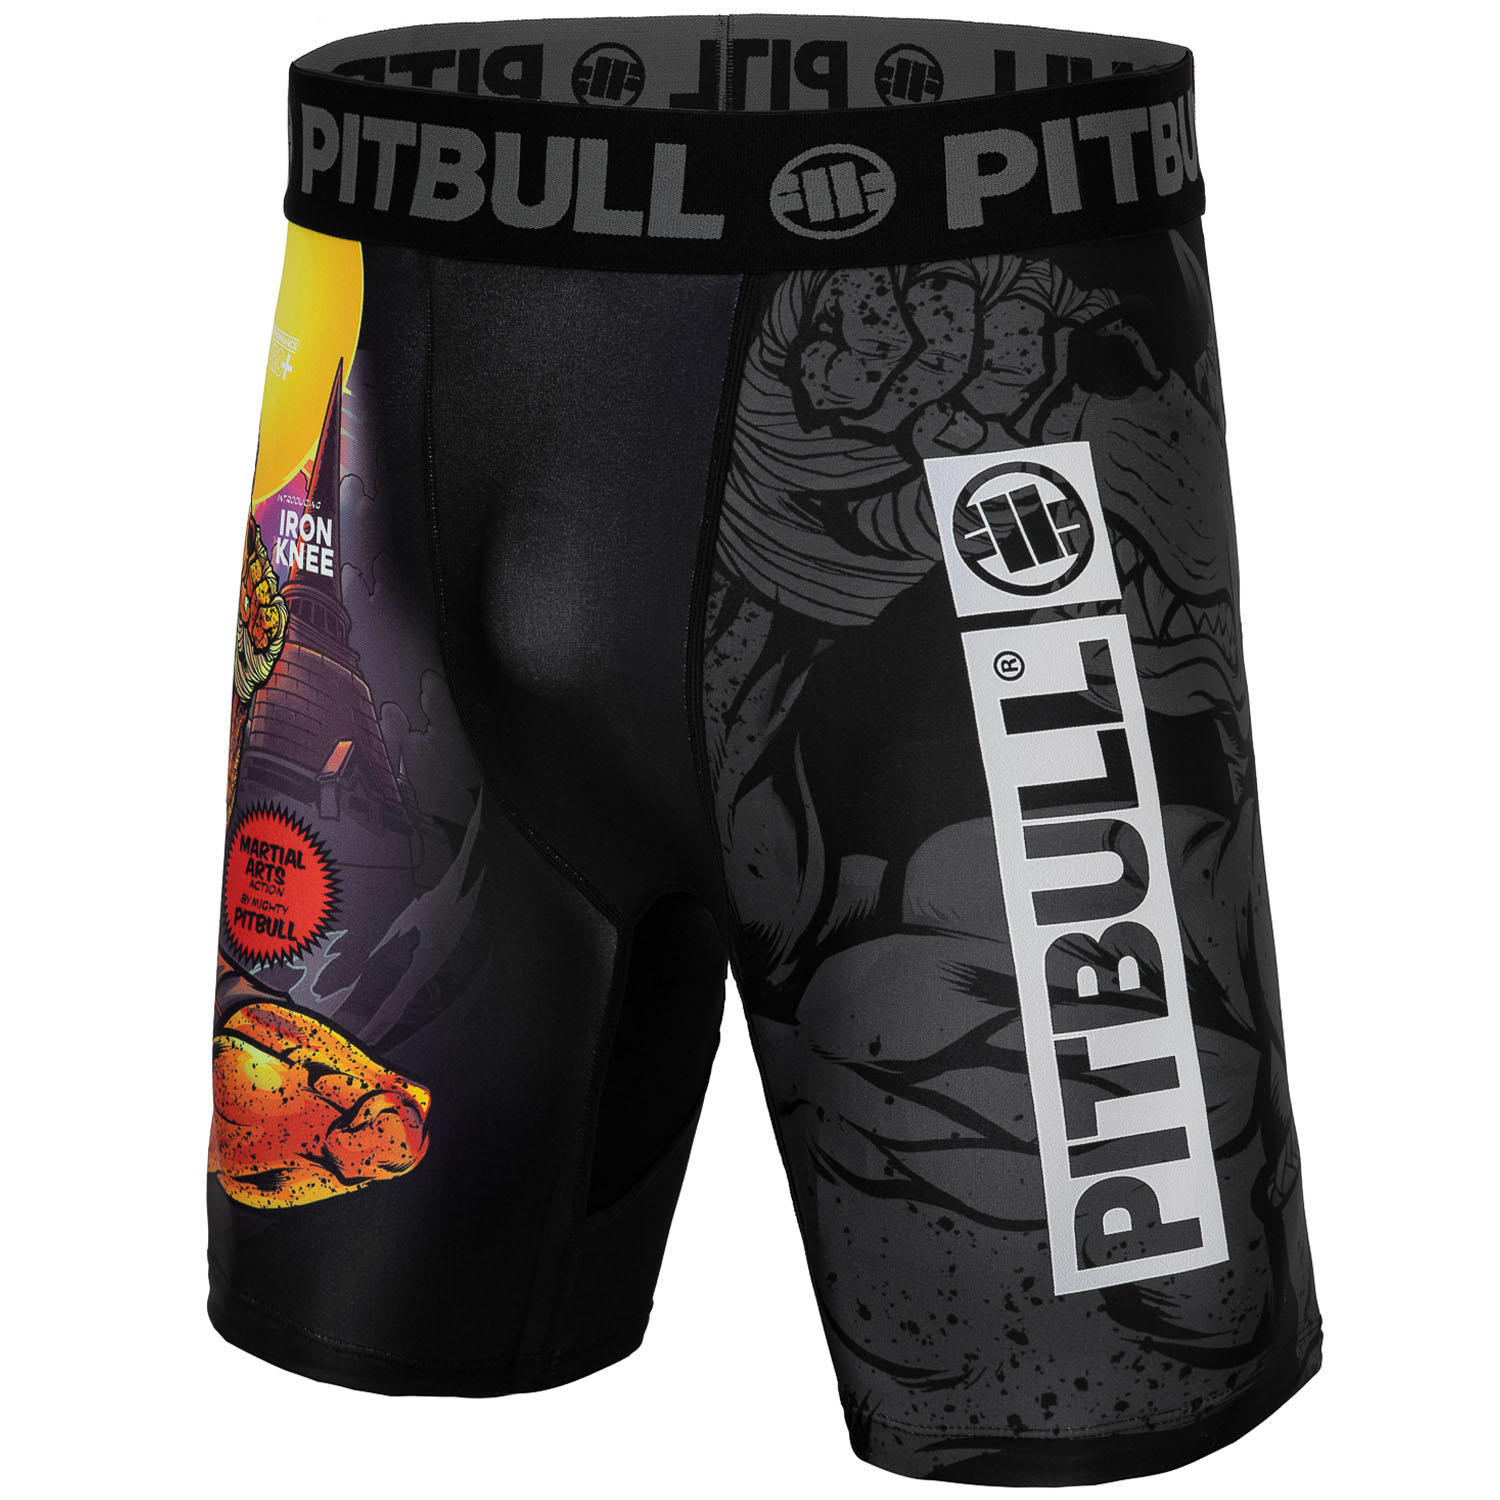 Pit Bull West Coast Compression Shorts, Masters Of Muay Thai, schwarz